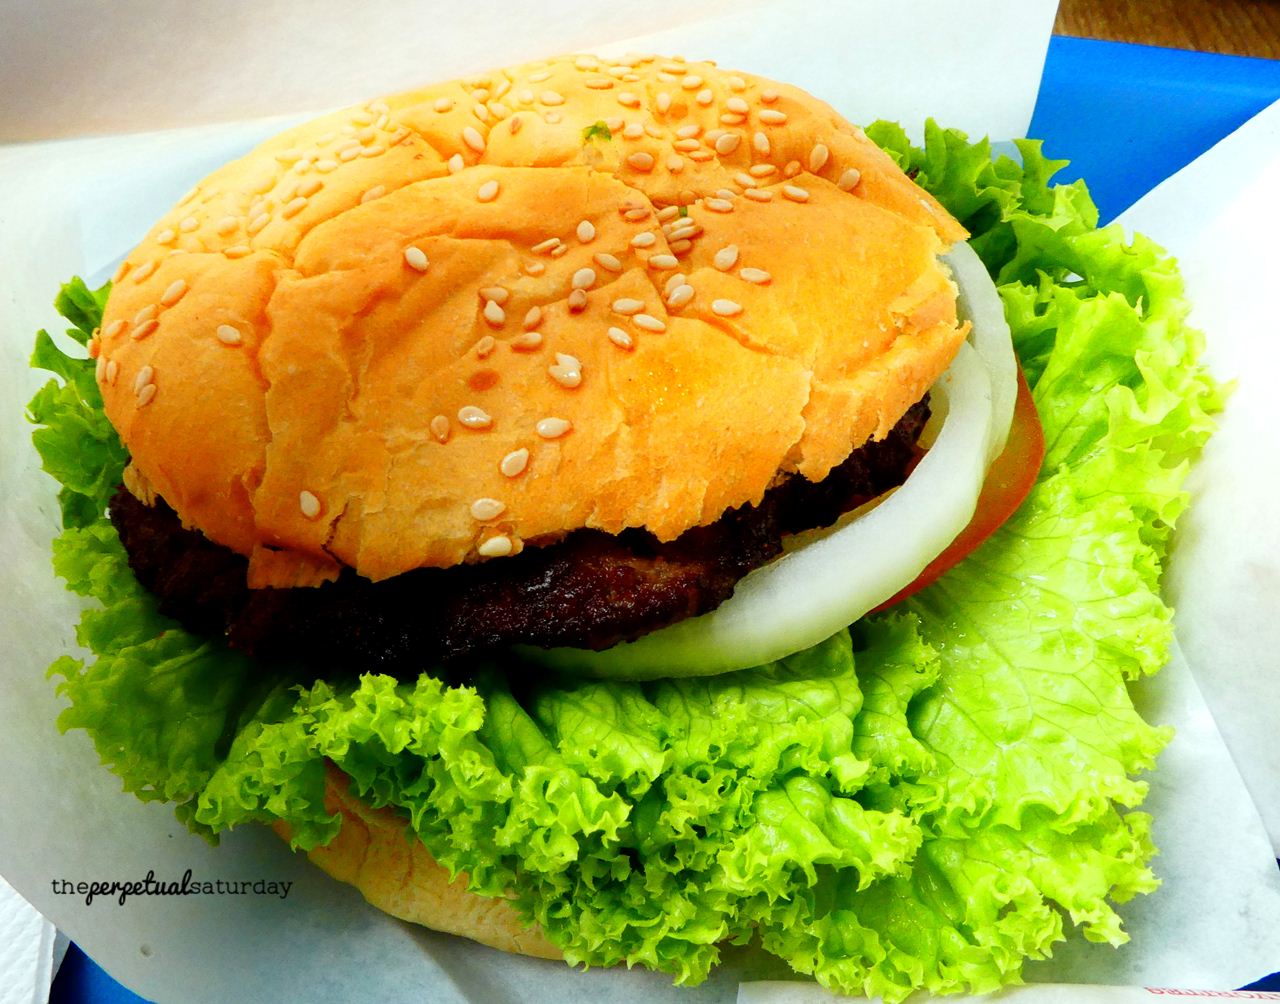 Hamburger (RM8.50) @ Harley's, Damansara City Mall